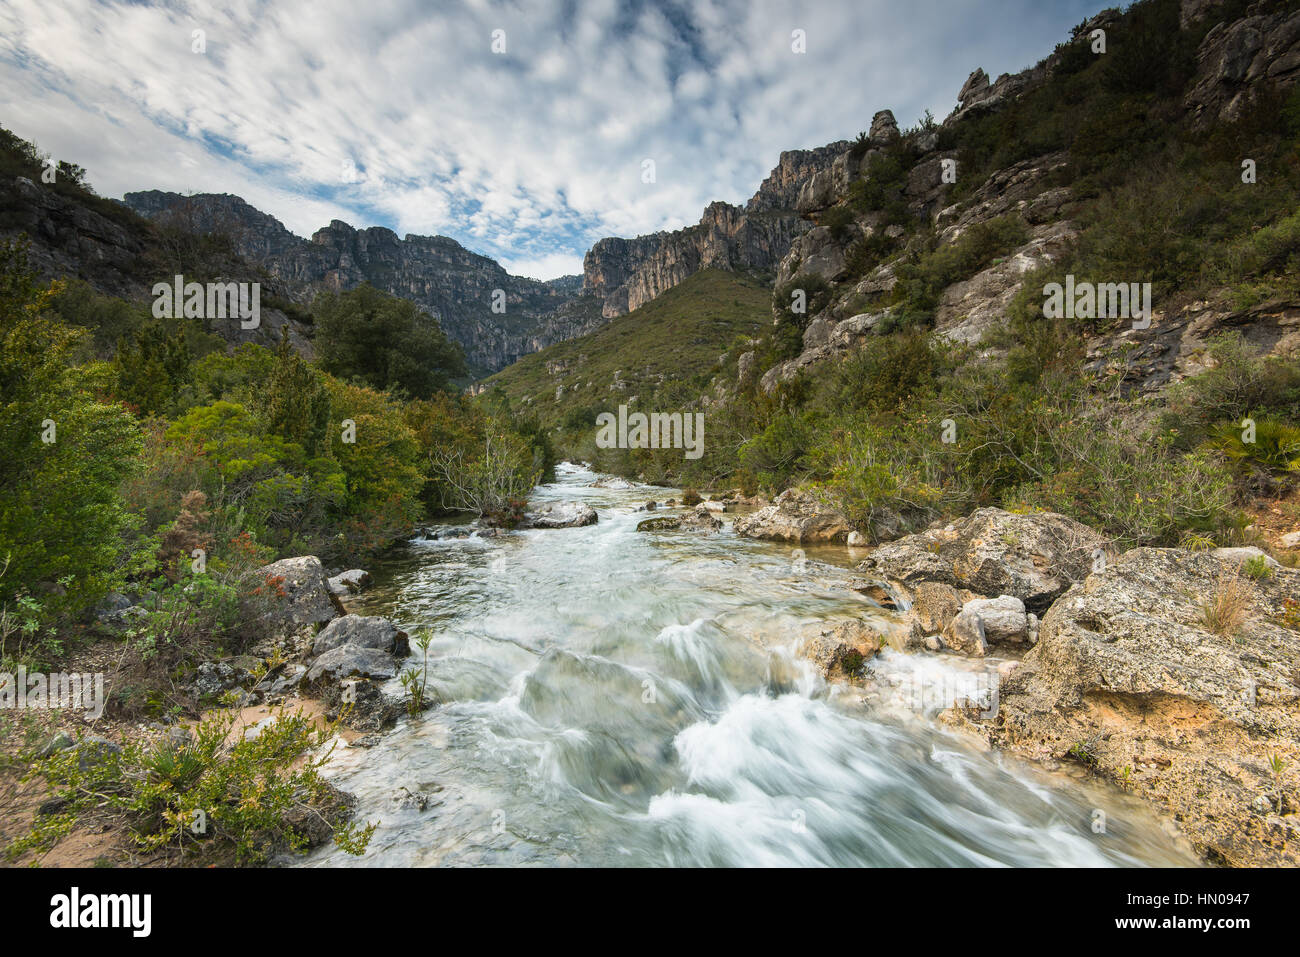 Che scorre veloce creek in Els porte parco naturale, Spagna Foto Stock